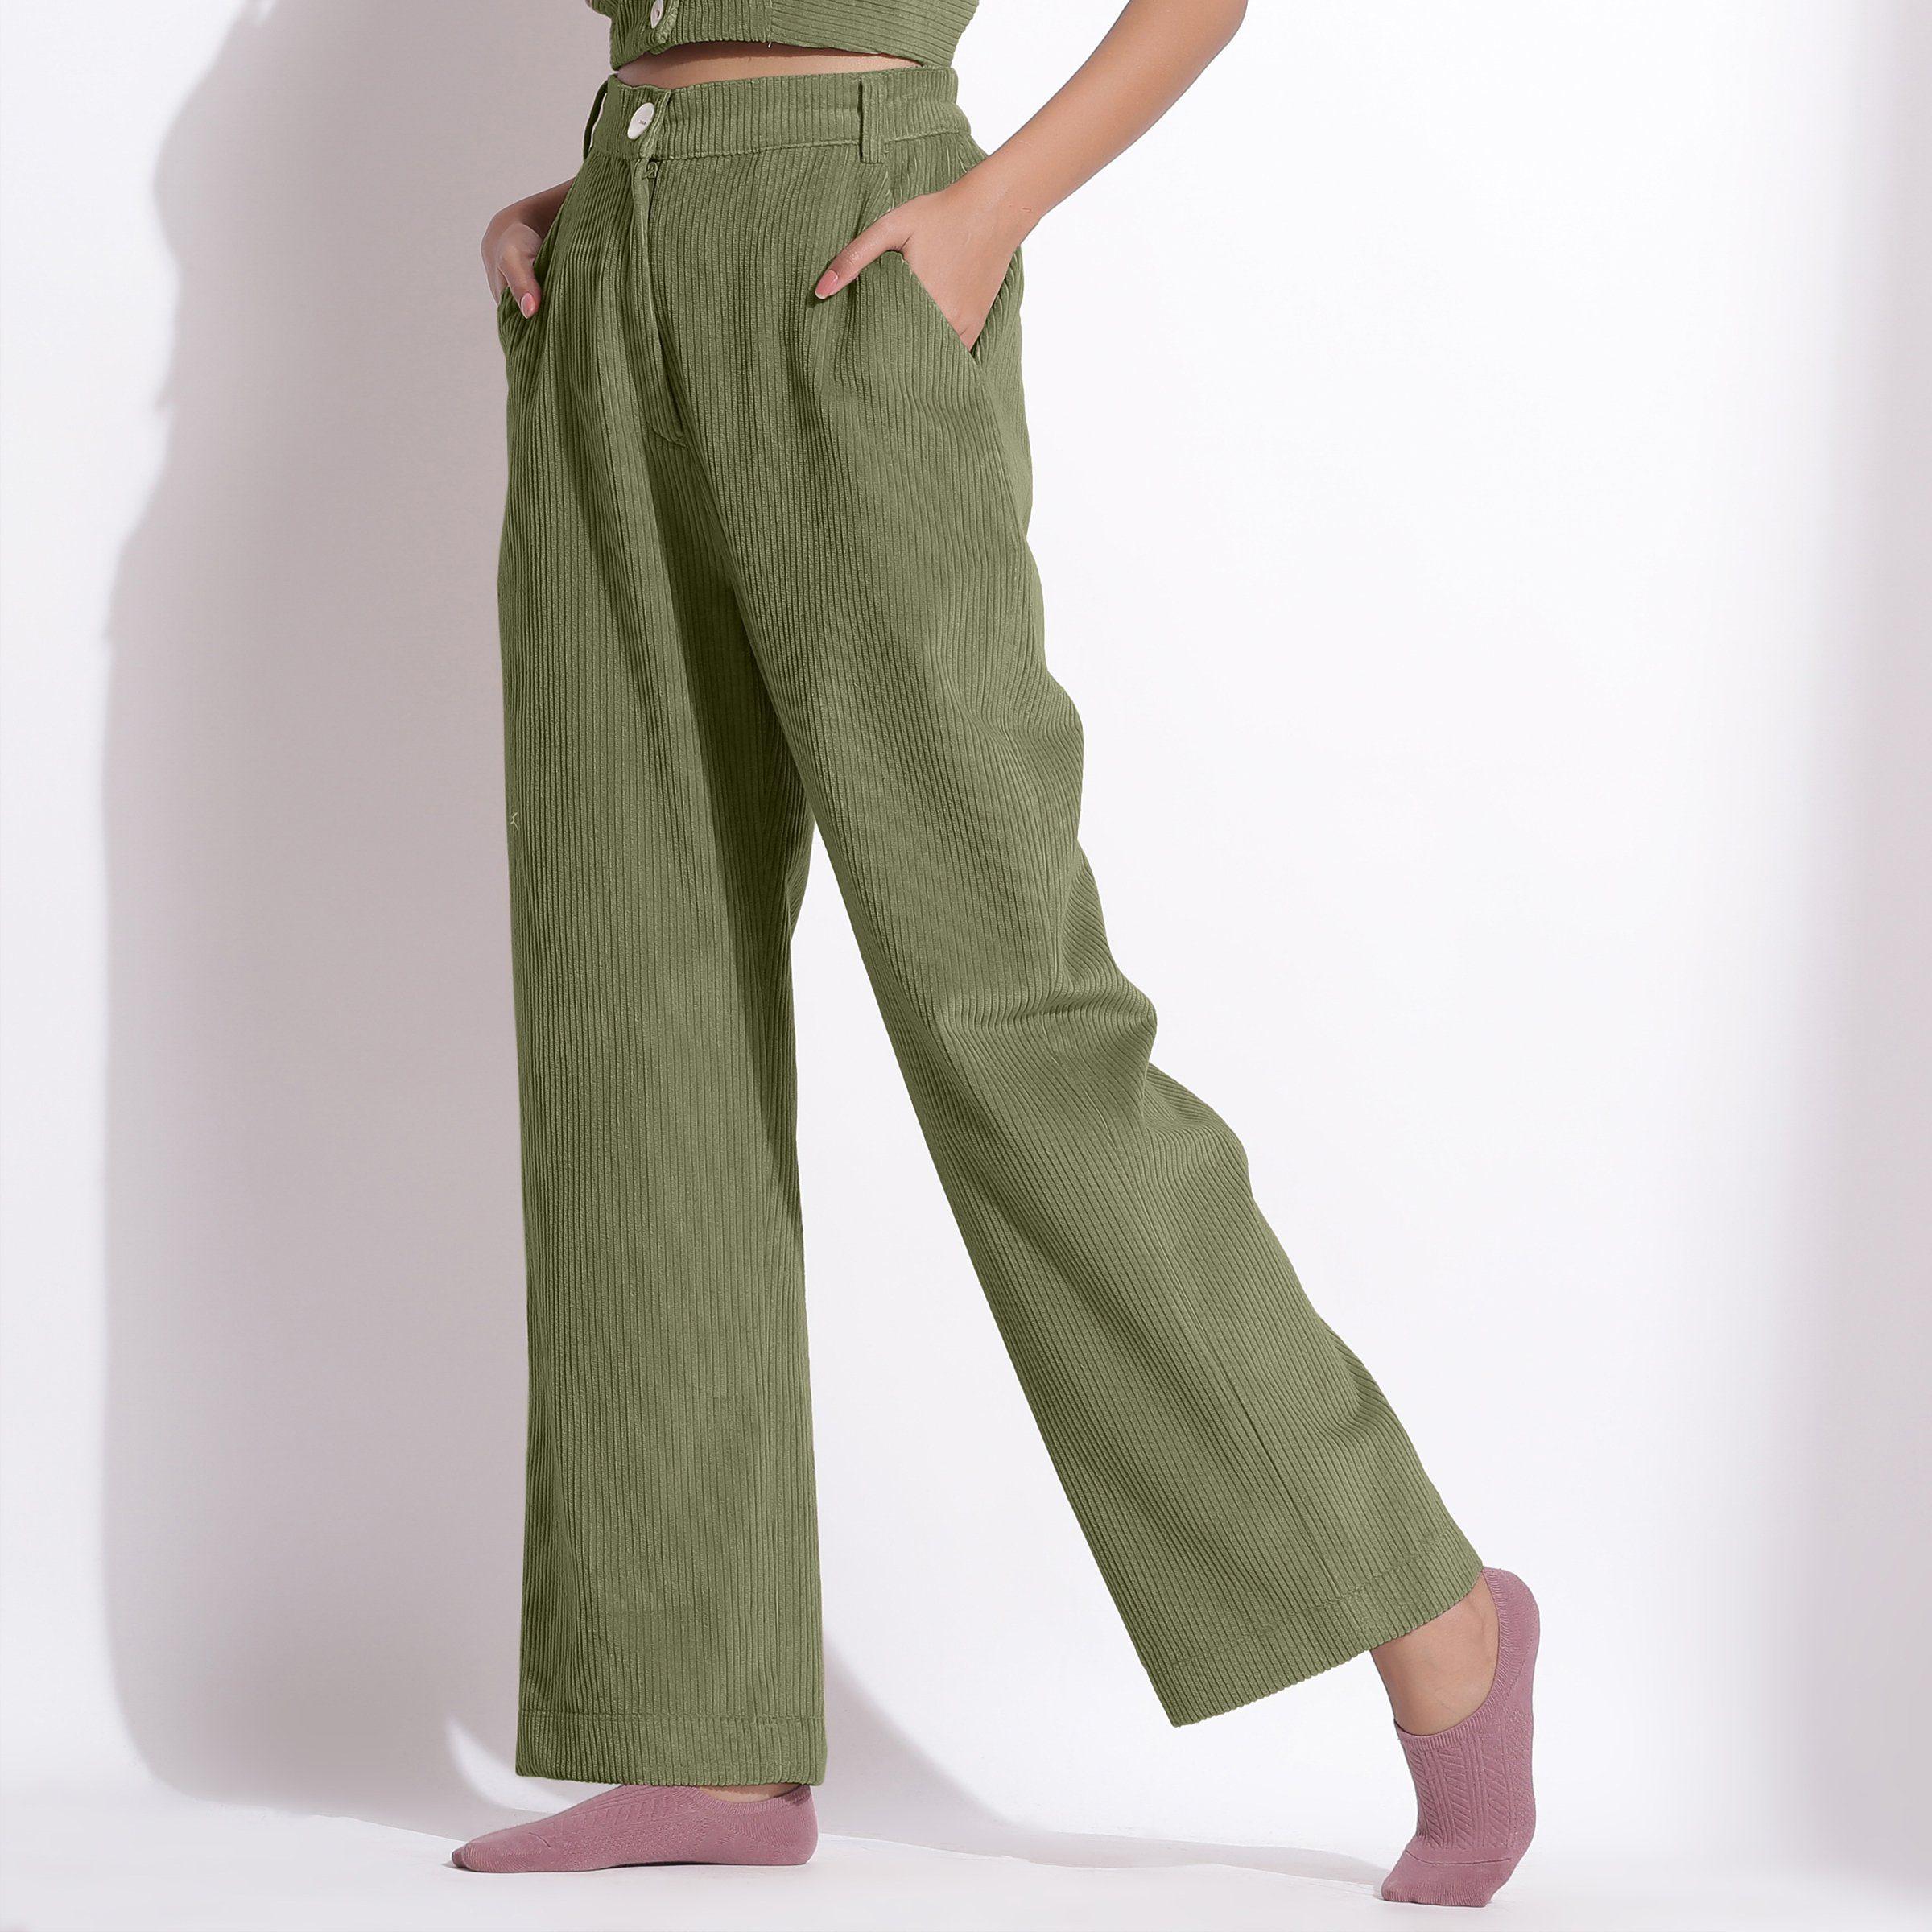 Women's Green Trousers, Sage Green Trousers